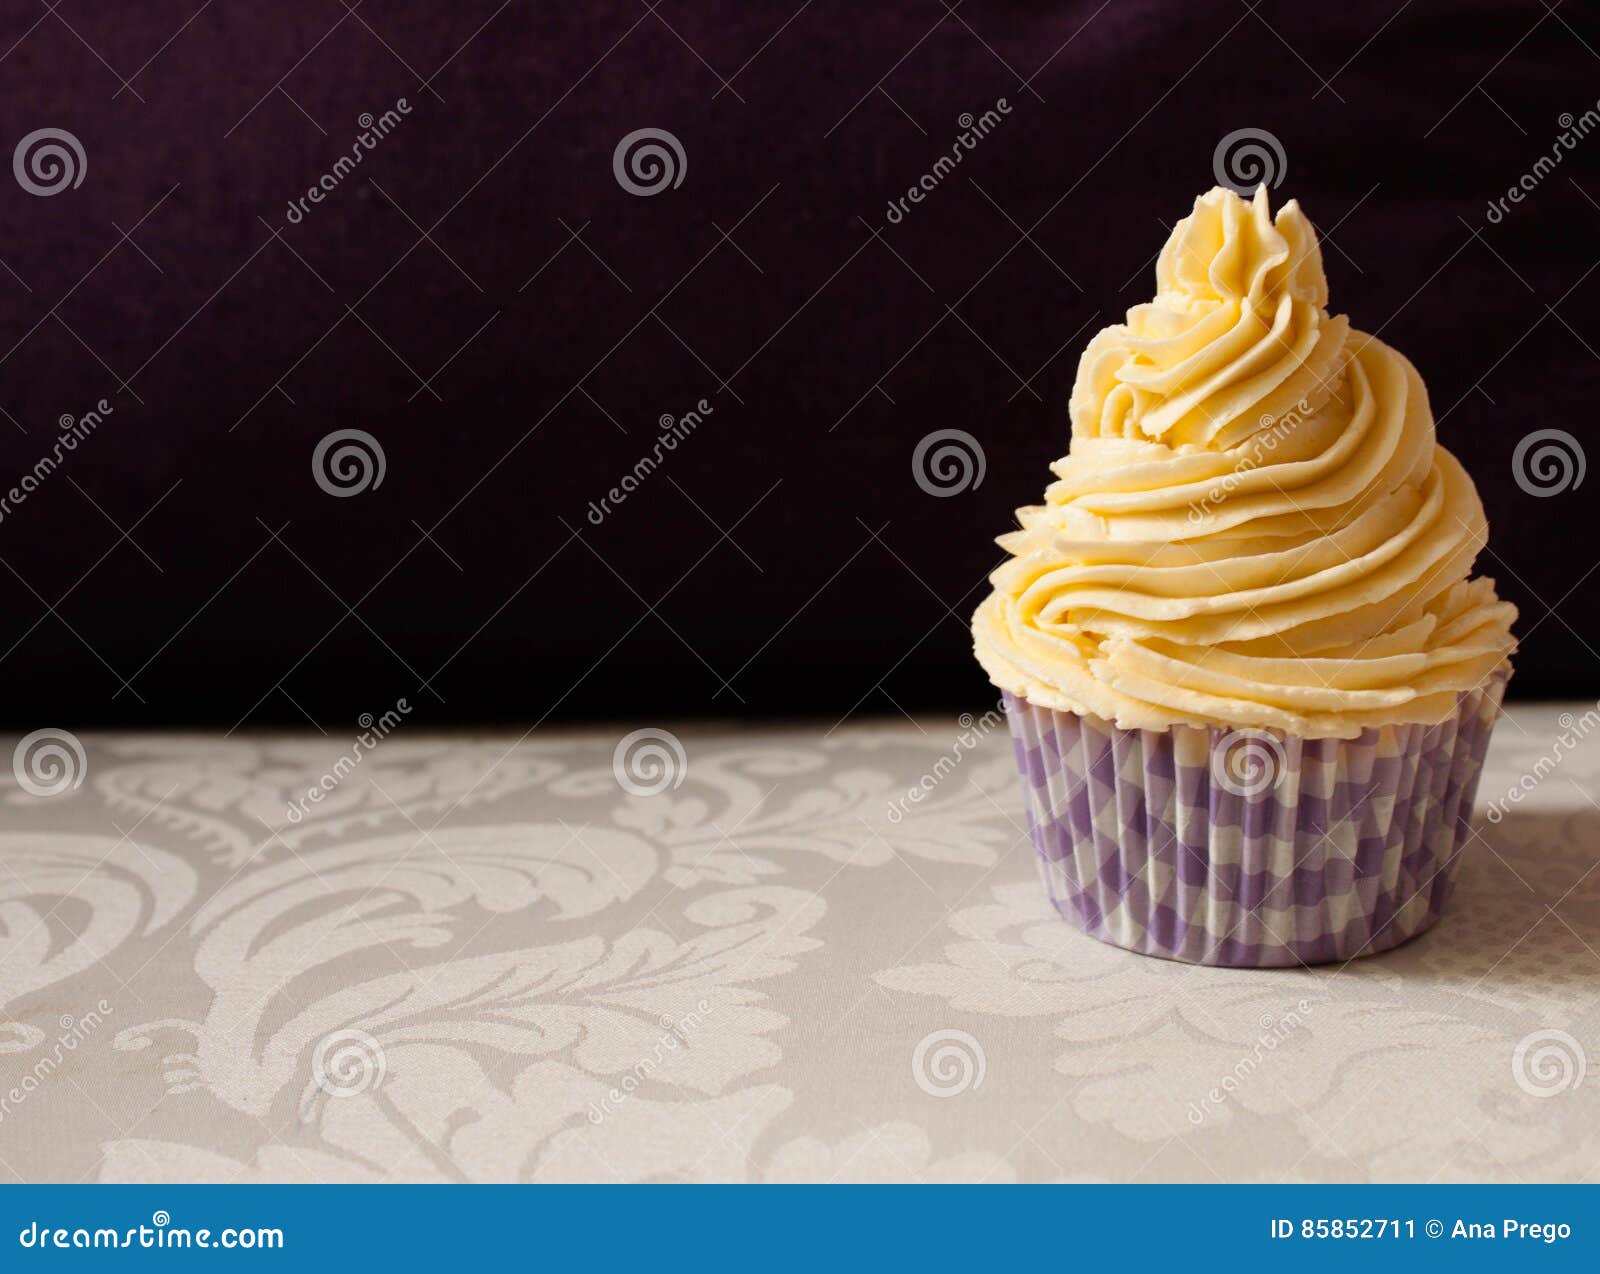 lovely cupcake in purple